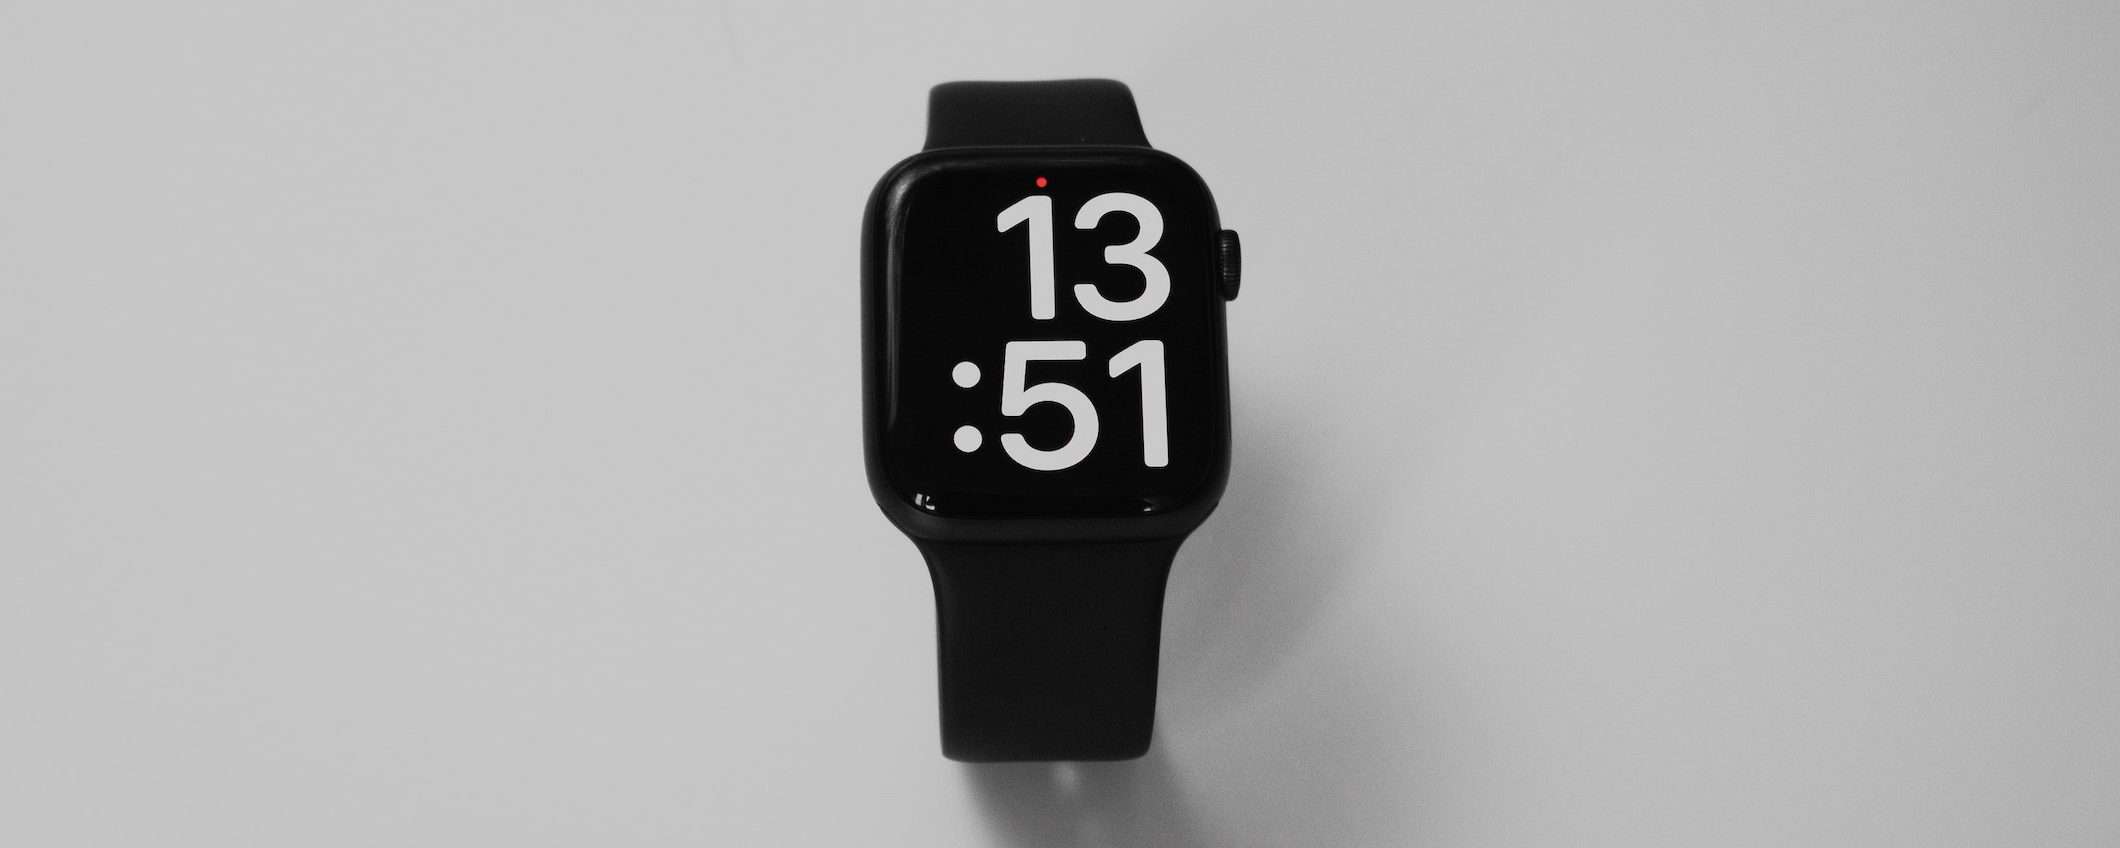 Apple Watch: nuovi sensori oltre la salute